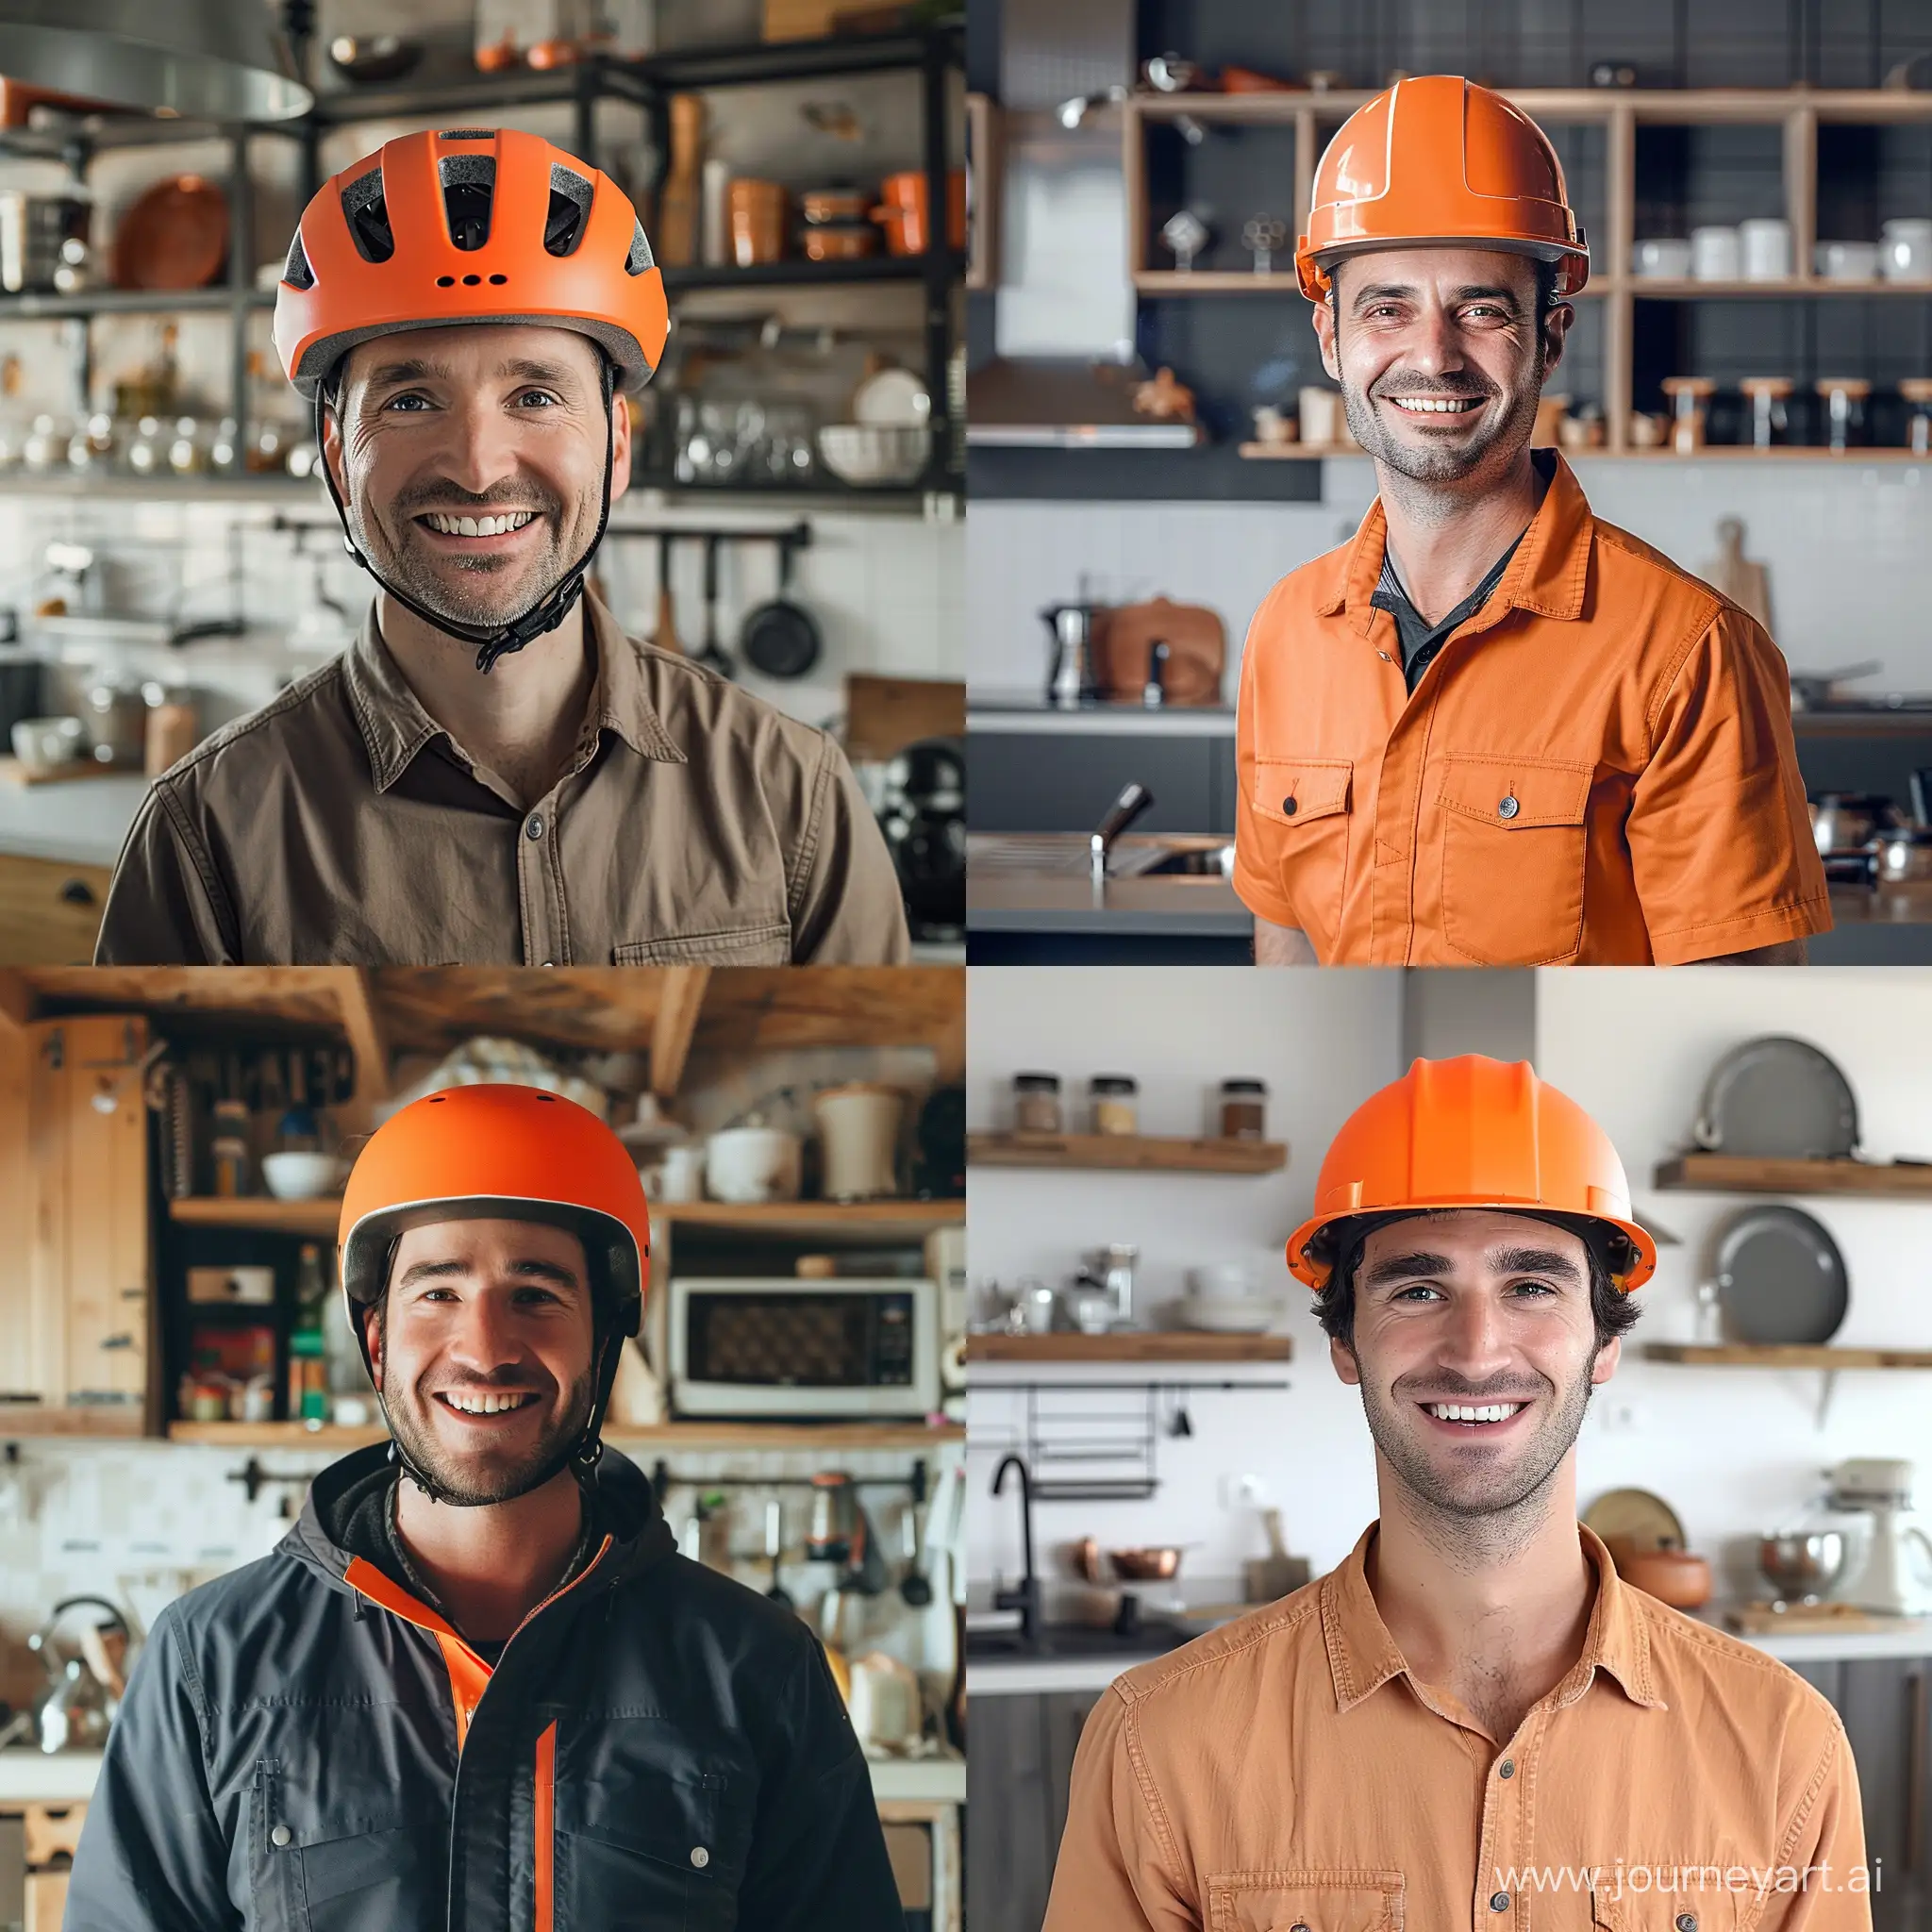 Smiling-Man-in-Orange-Helmet-in-Kitchen-Setting